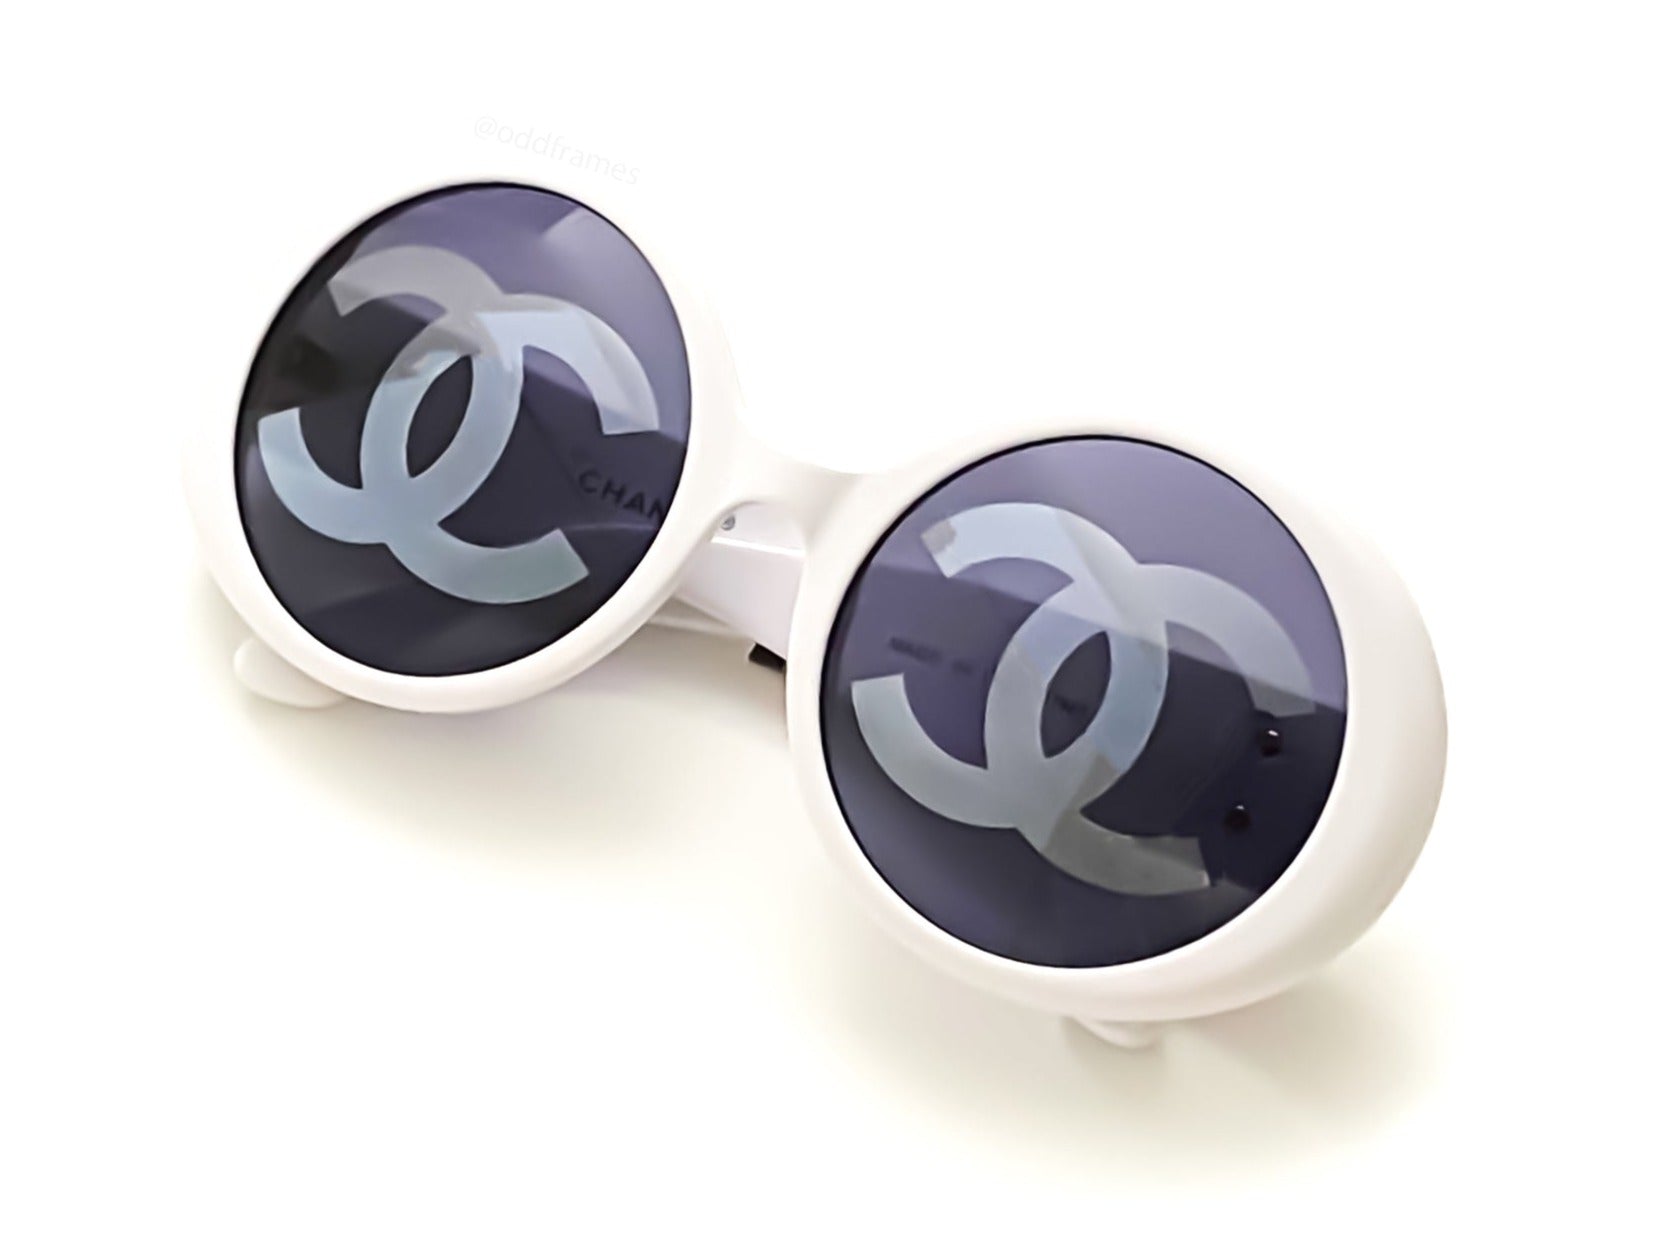 vintage round chanel sunglasses